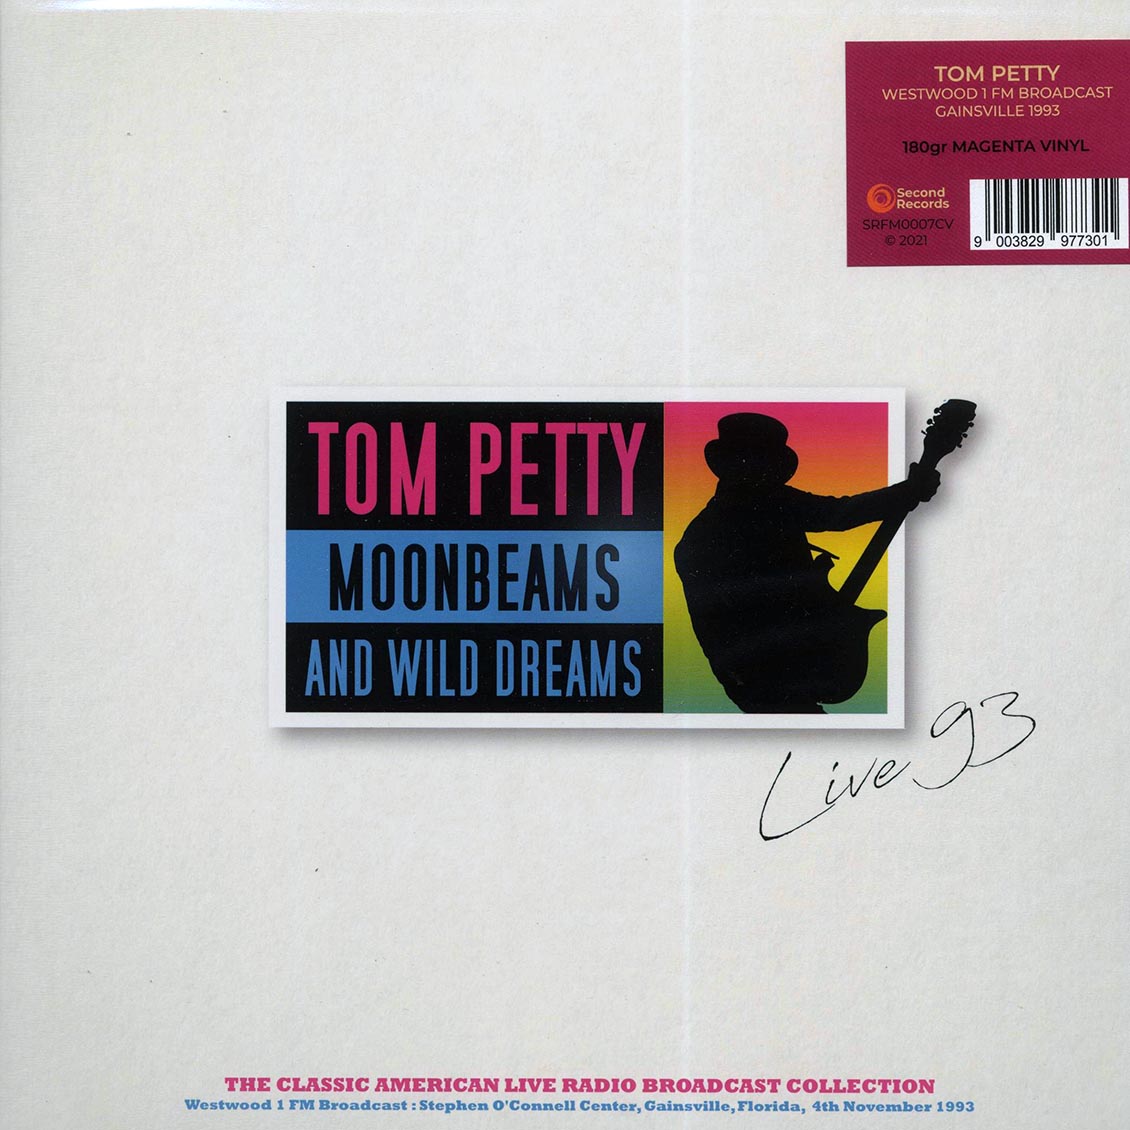 Tom Petty - Moonbeams And Wild Dreams: Stephen O'Connell Center, Gainesville, Florida, 14th November 1993 (180g) (magenta vinyl) - Vinyl LP